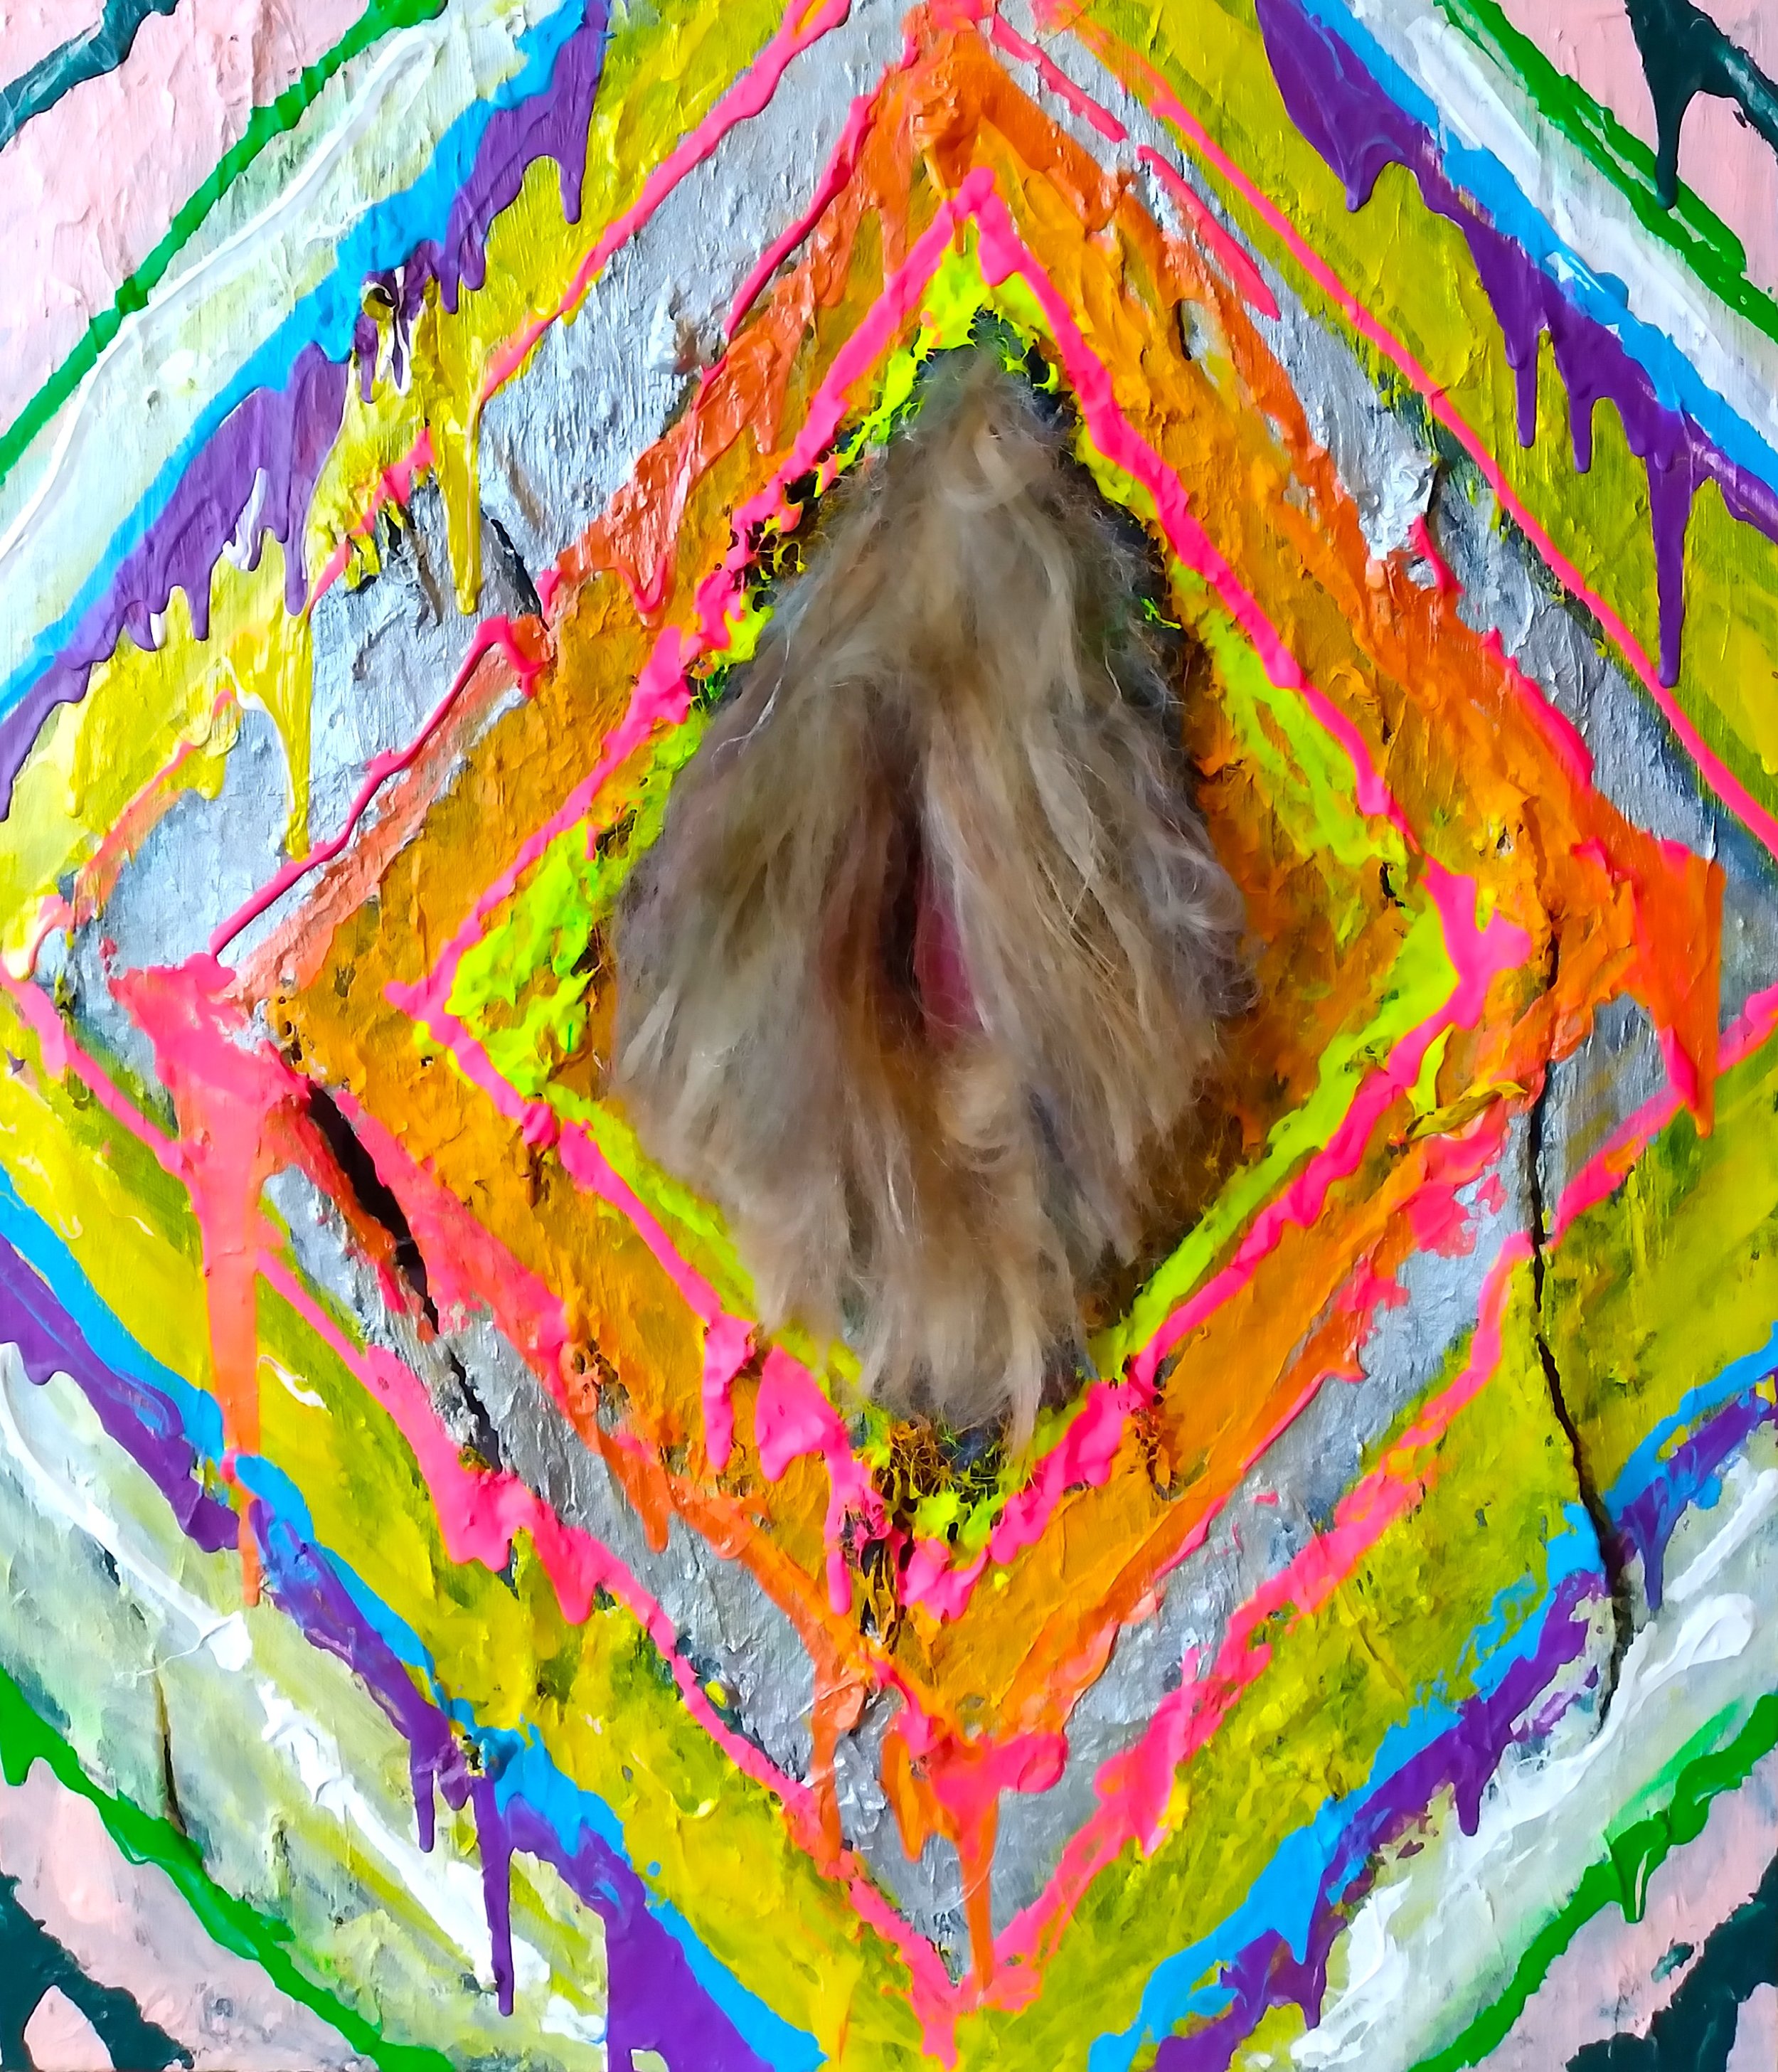 The Bermuda Triangle, 2021. Oil, acrylic, wig on canvas. 30” x 26”.